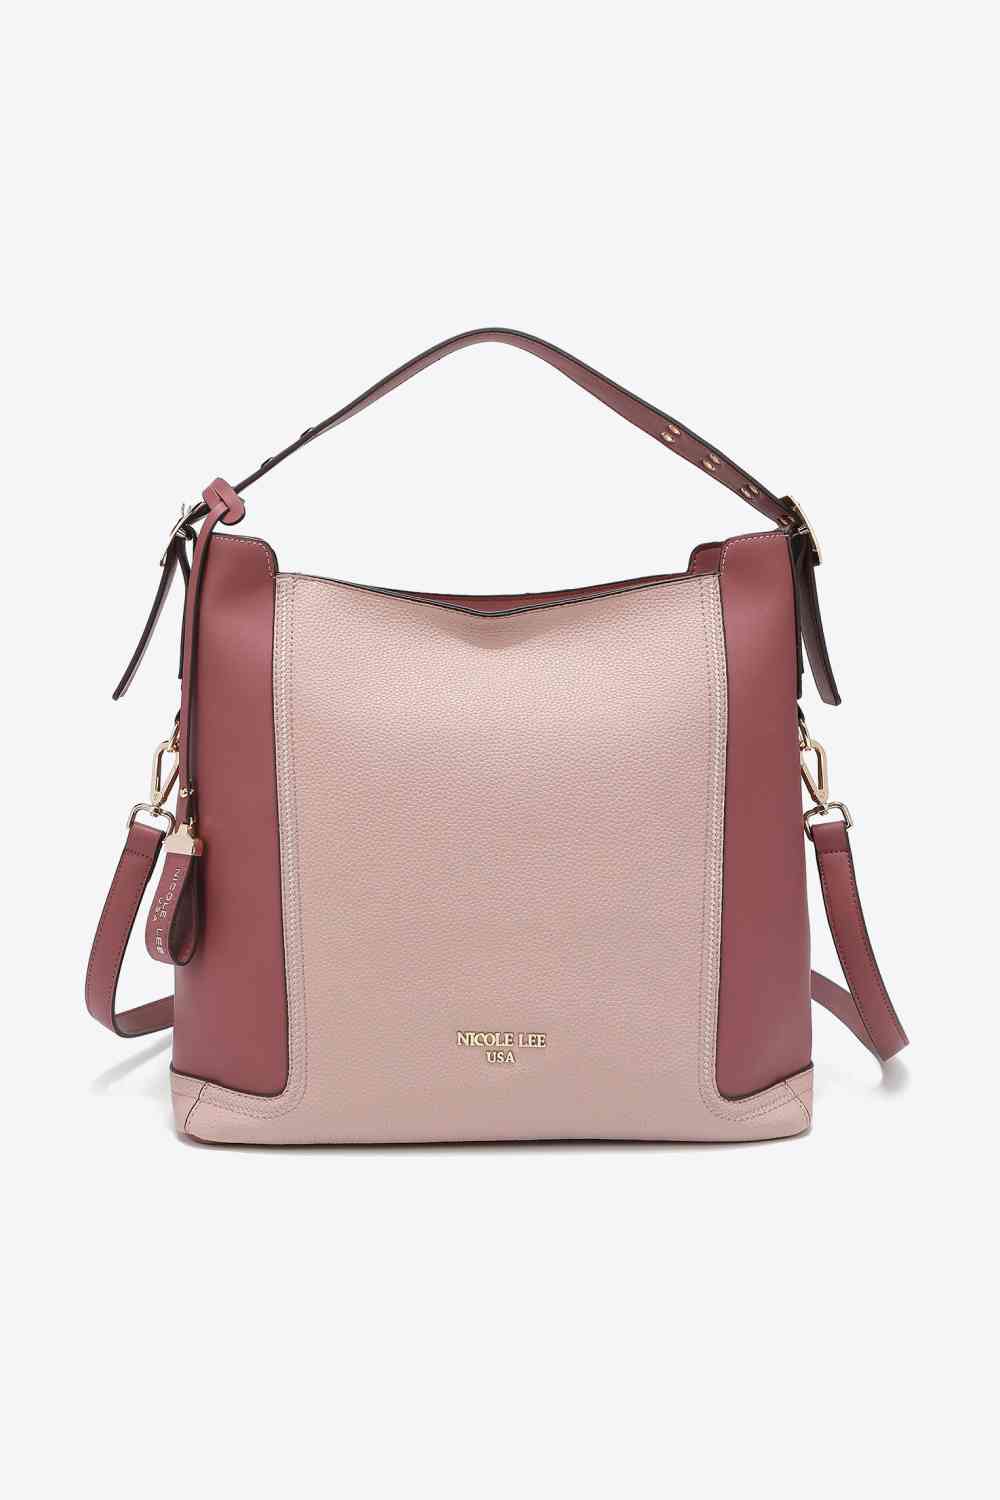 Misty Rose Nicole Lee USA Make it Right Handbag Sentient Beauty Fashions *Accessories